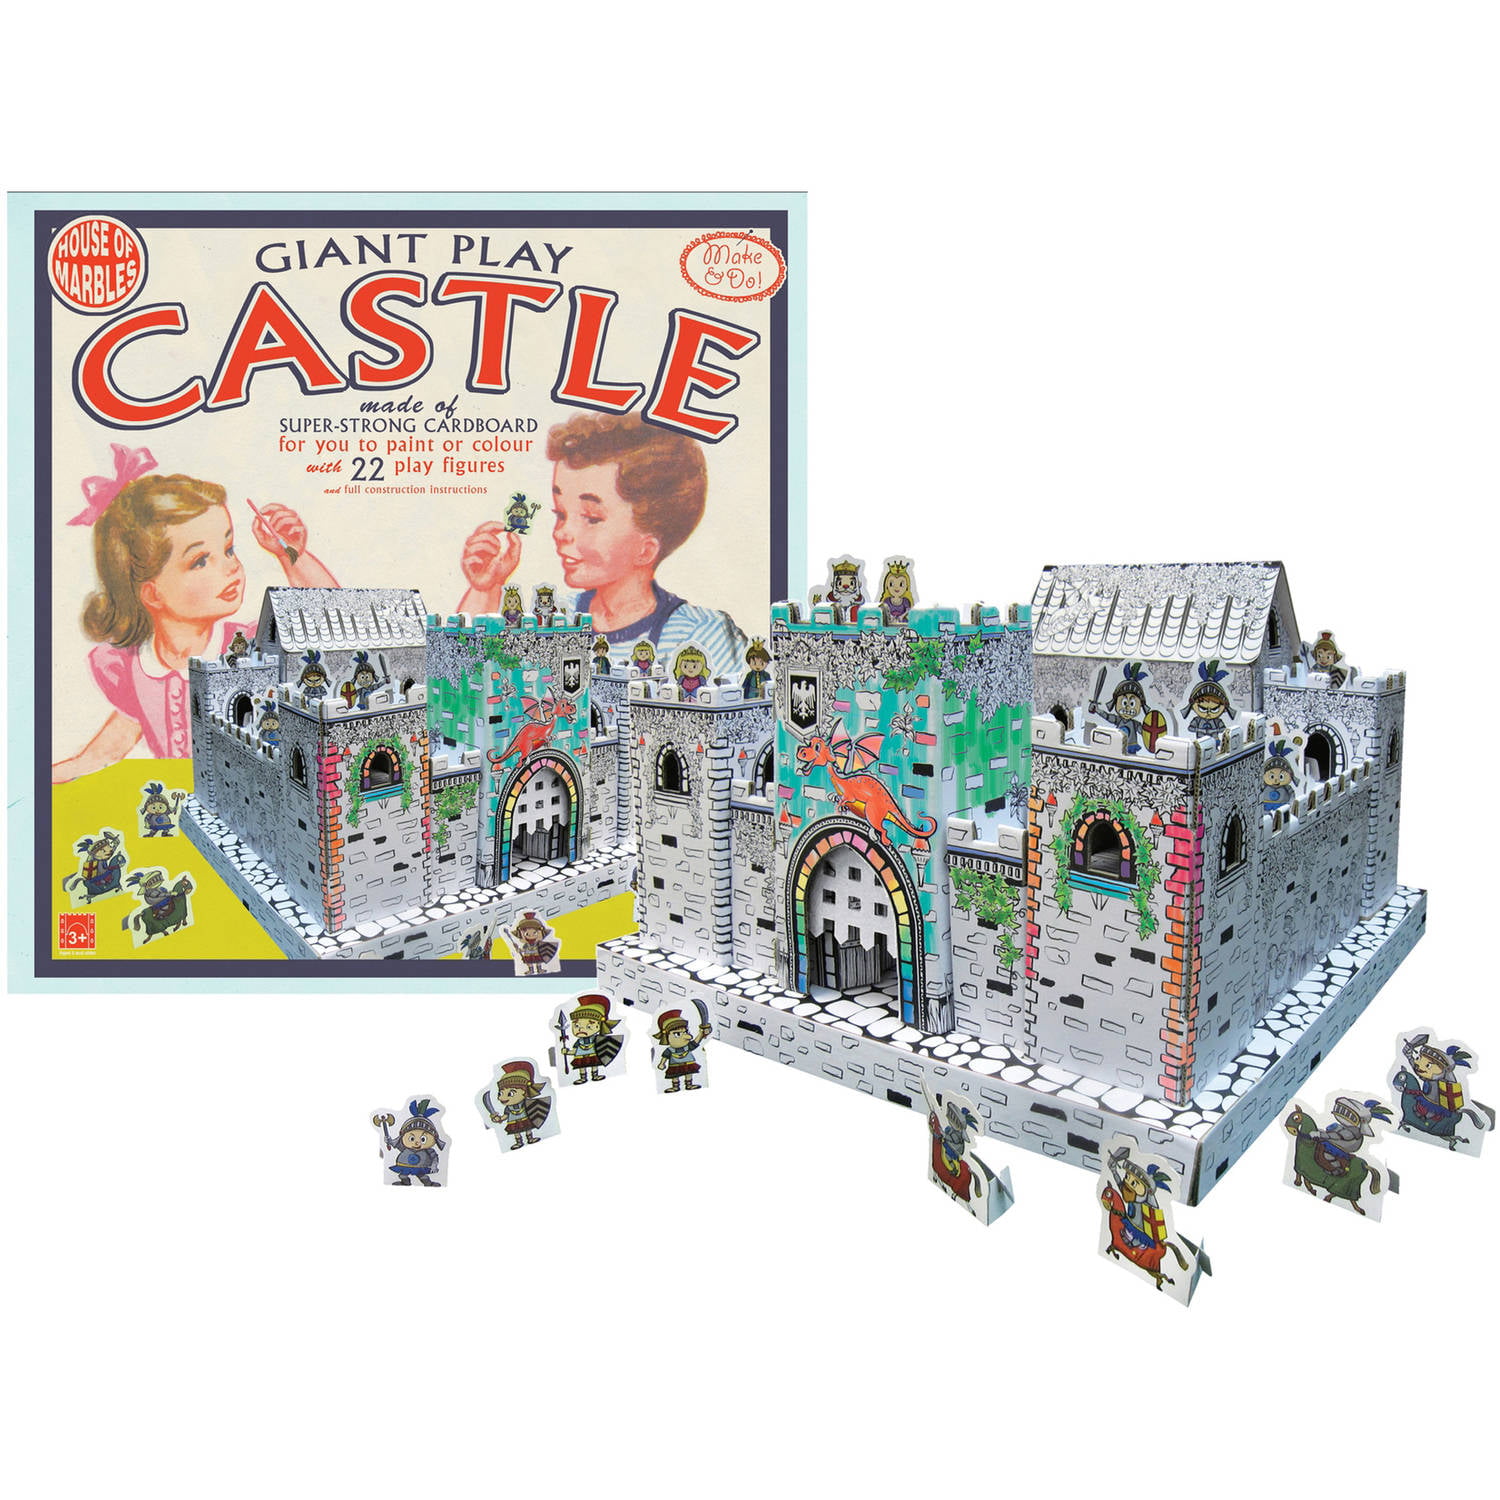 Cardboard Castle using Makedo 